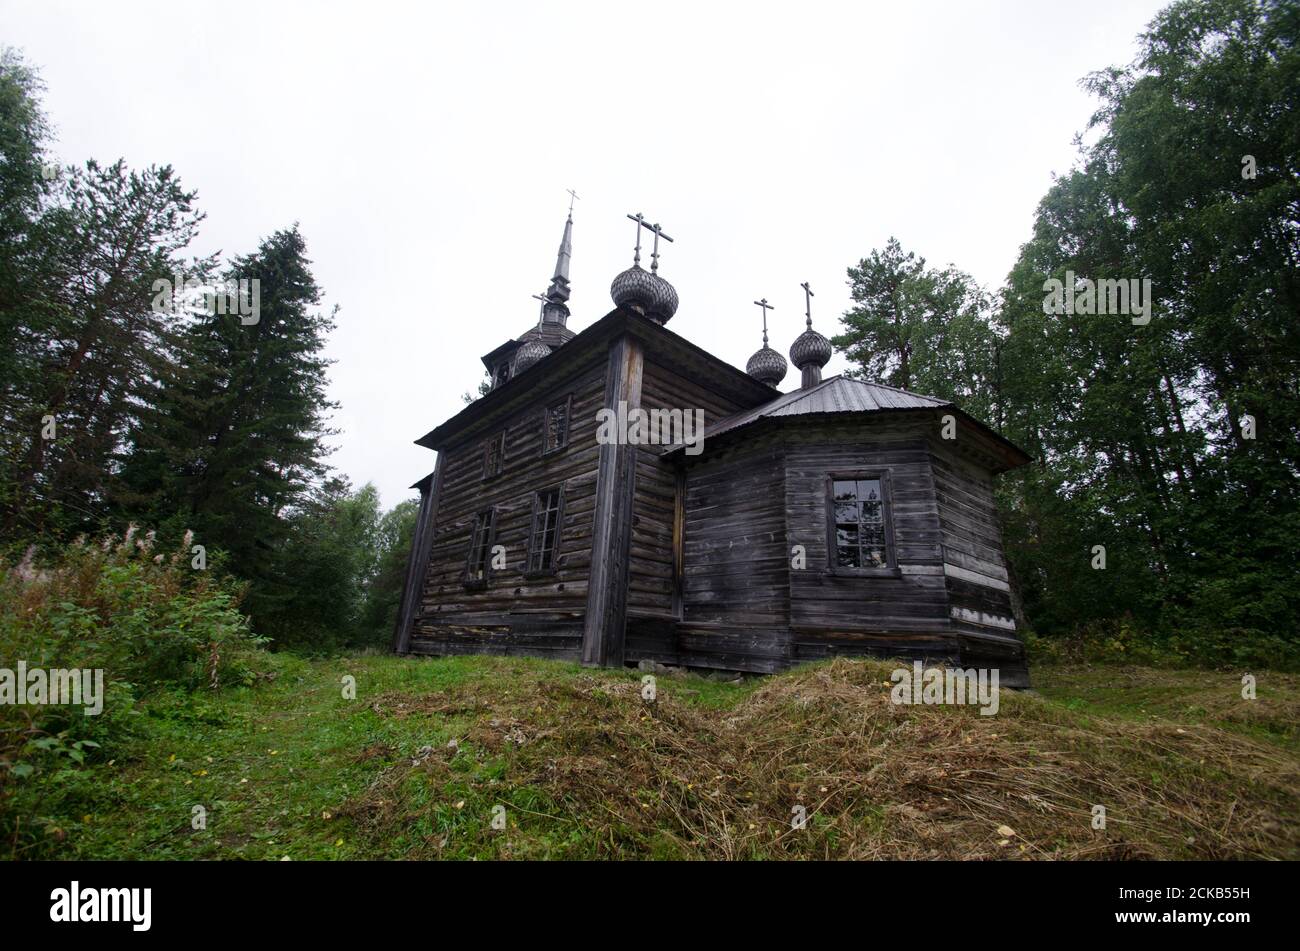 Chiesa ortodossa di legno su Khizhgor. Tempio nel nome di Alexander Svirsky. Russia, regione di Arkhangelsk, parco Kenozersky Foto Stock